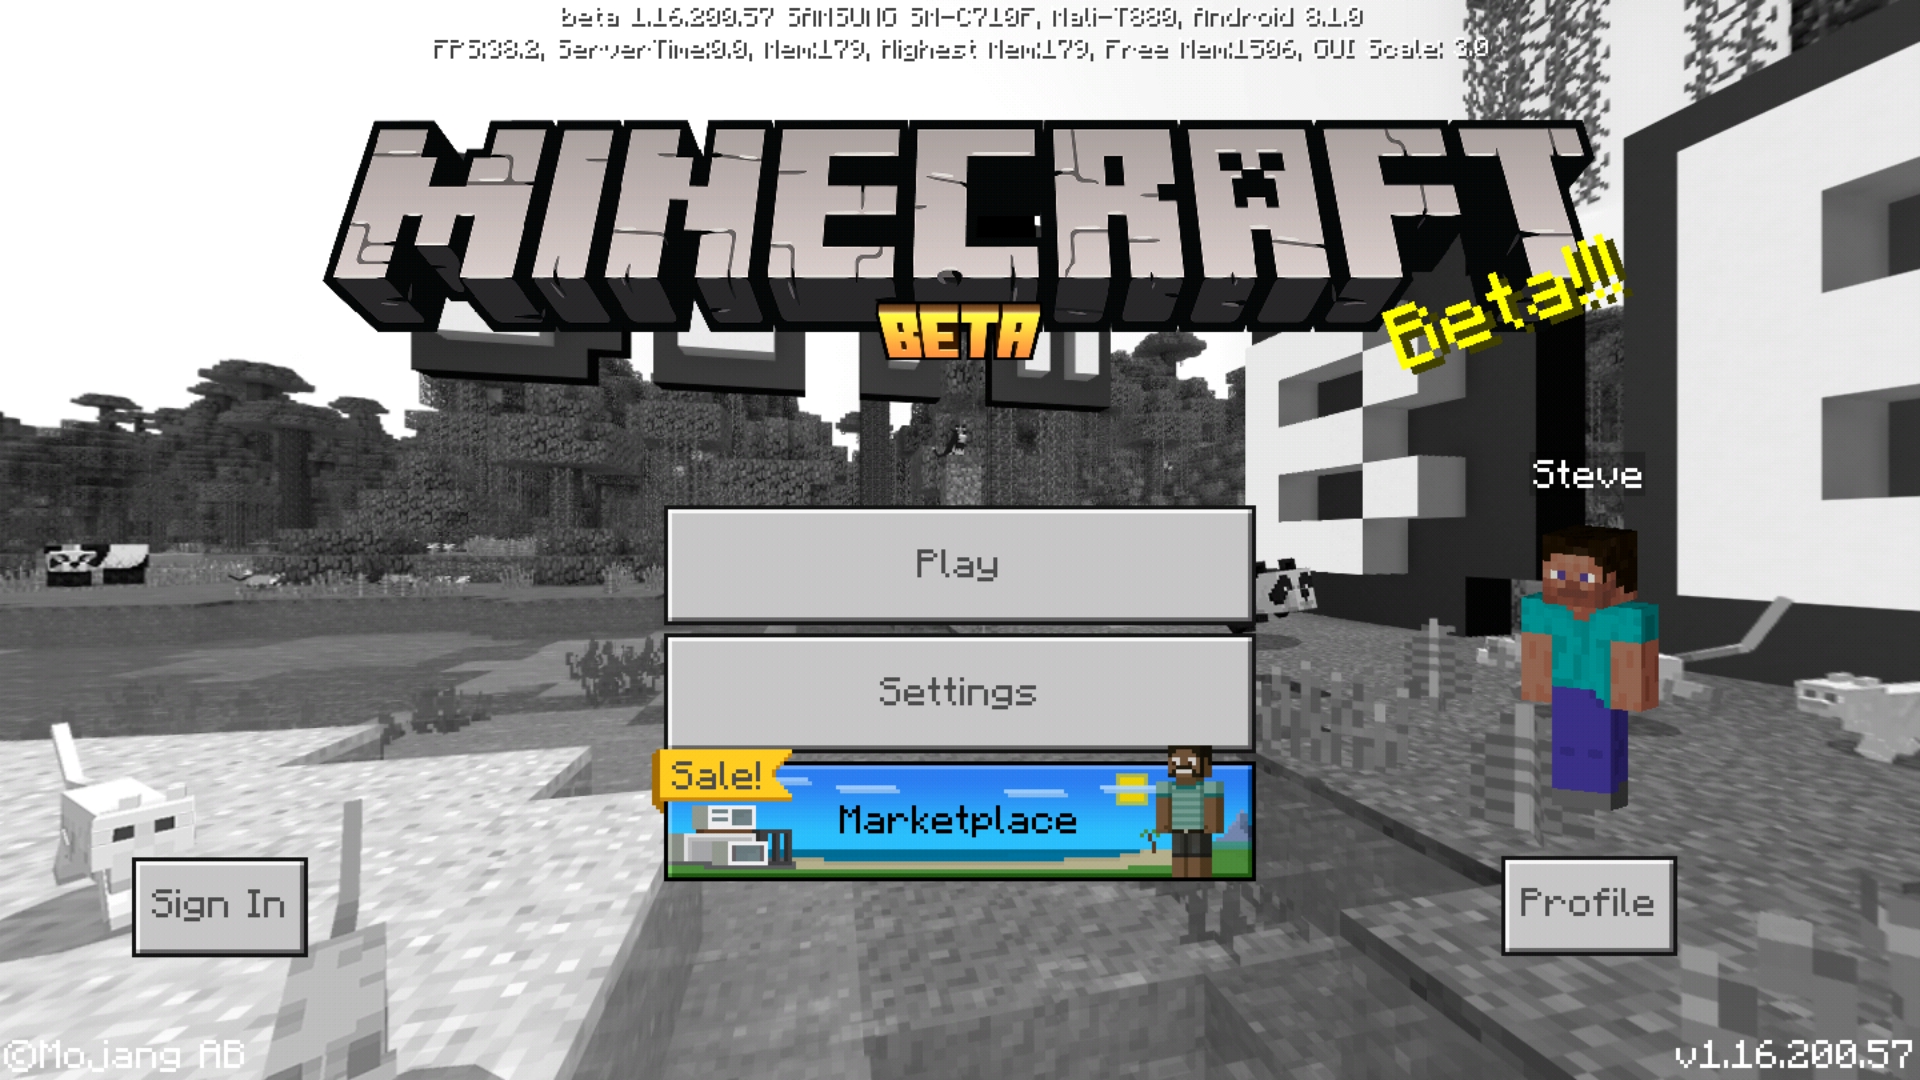 Download Minecraft PE 1.16.101 apk free: Nether Update